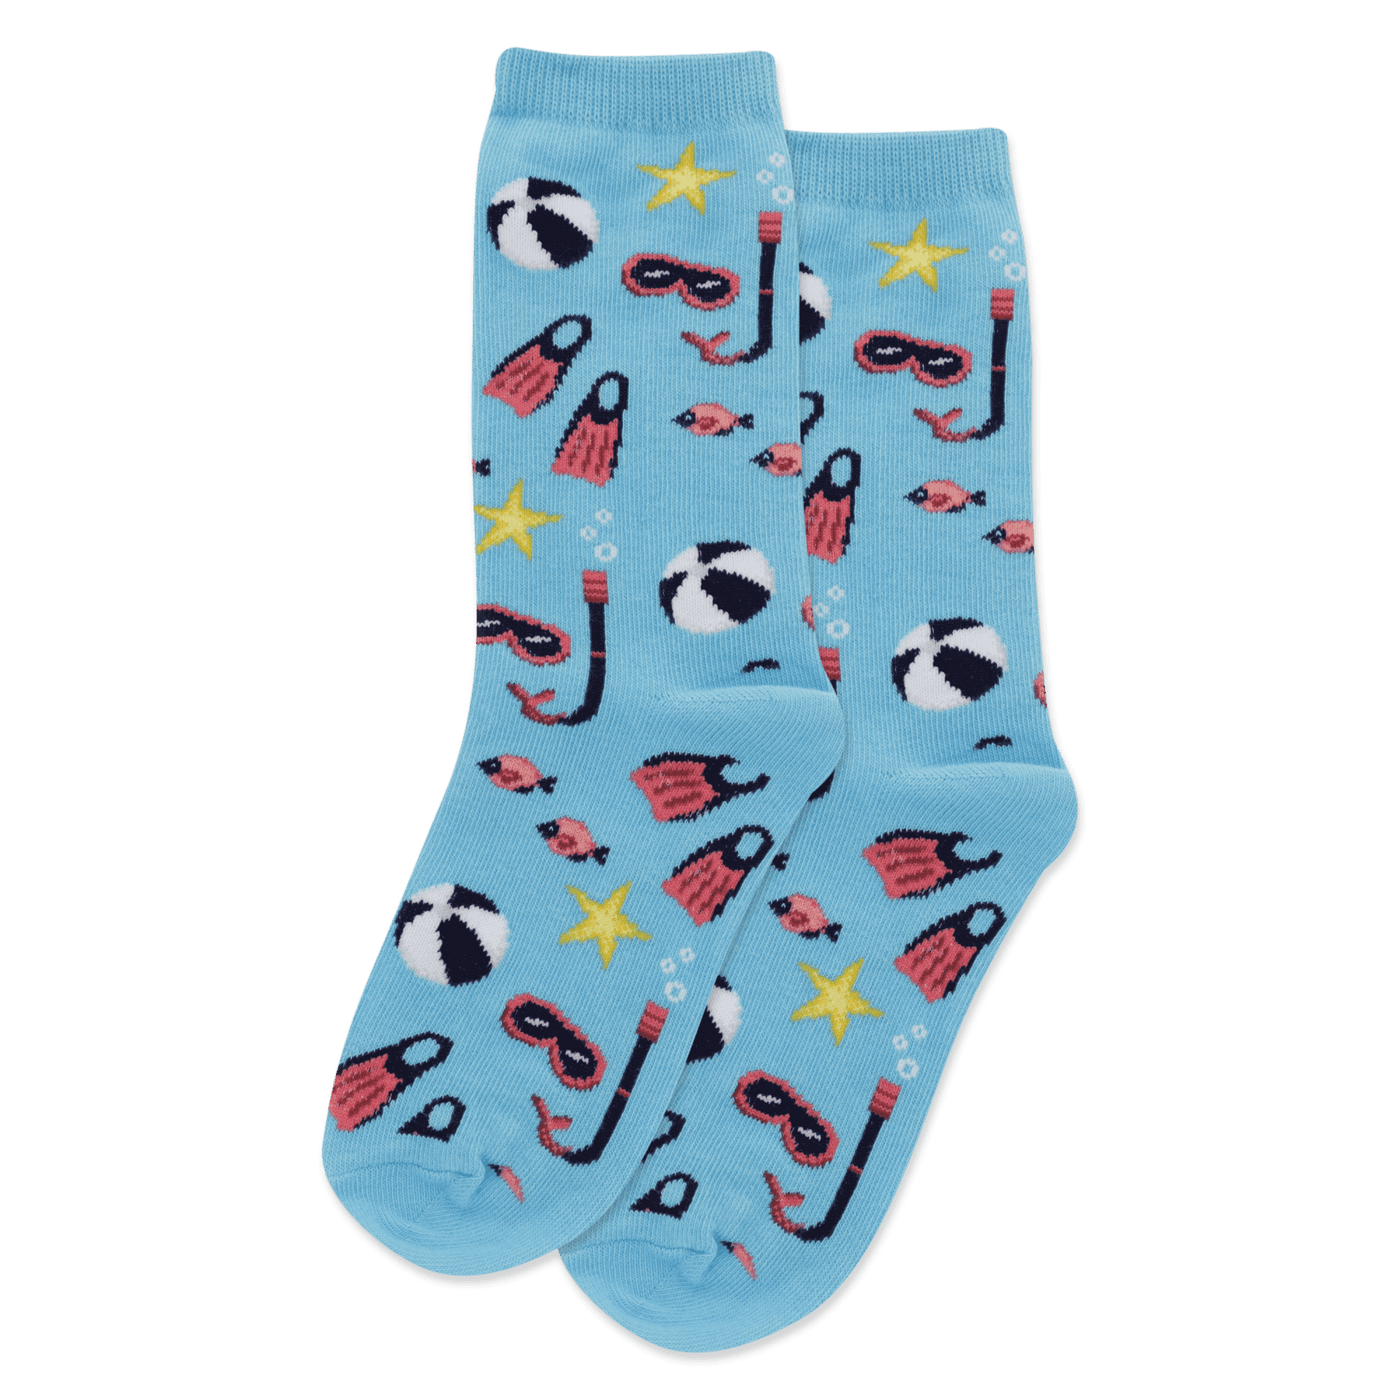 "Snorkel" Cotton Crew Socks by Hot Sox - SALE